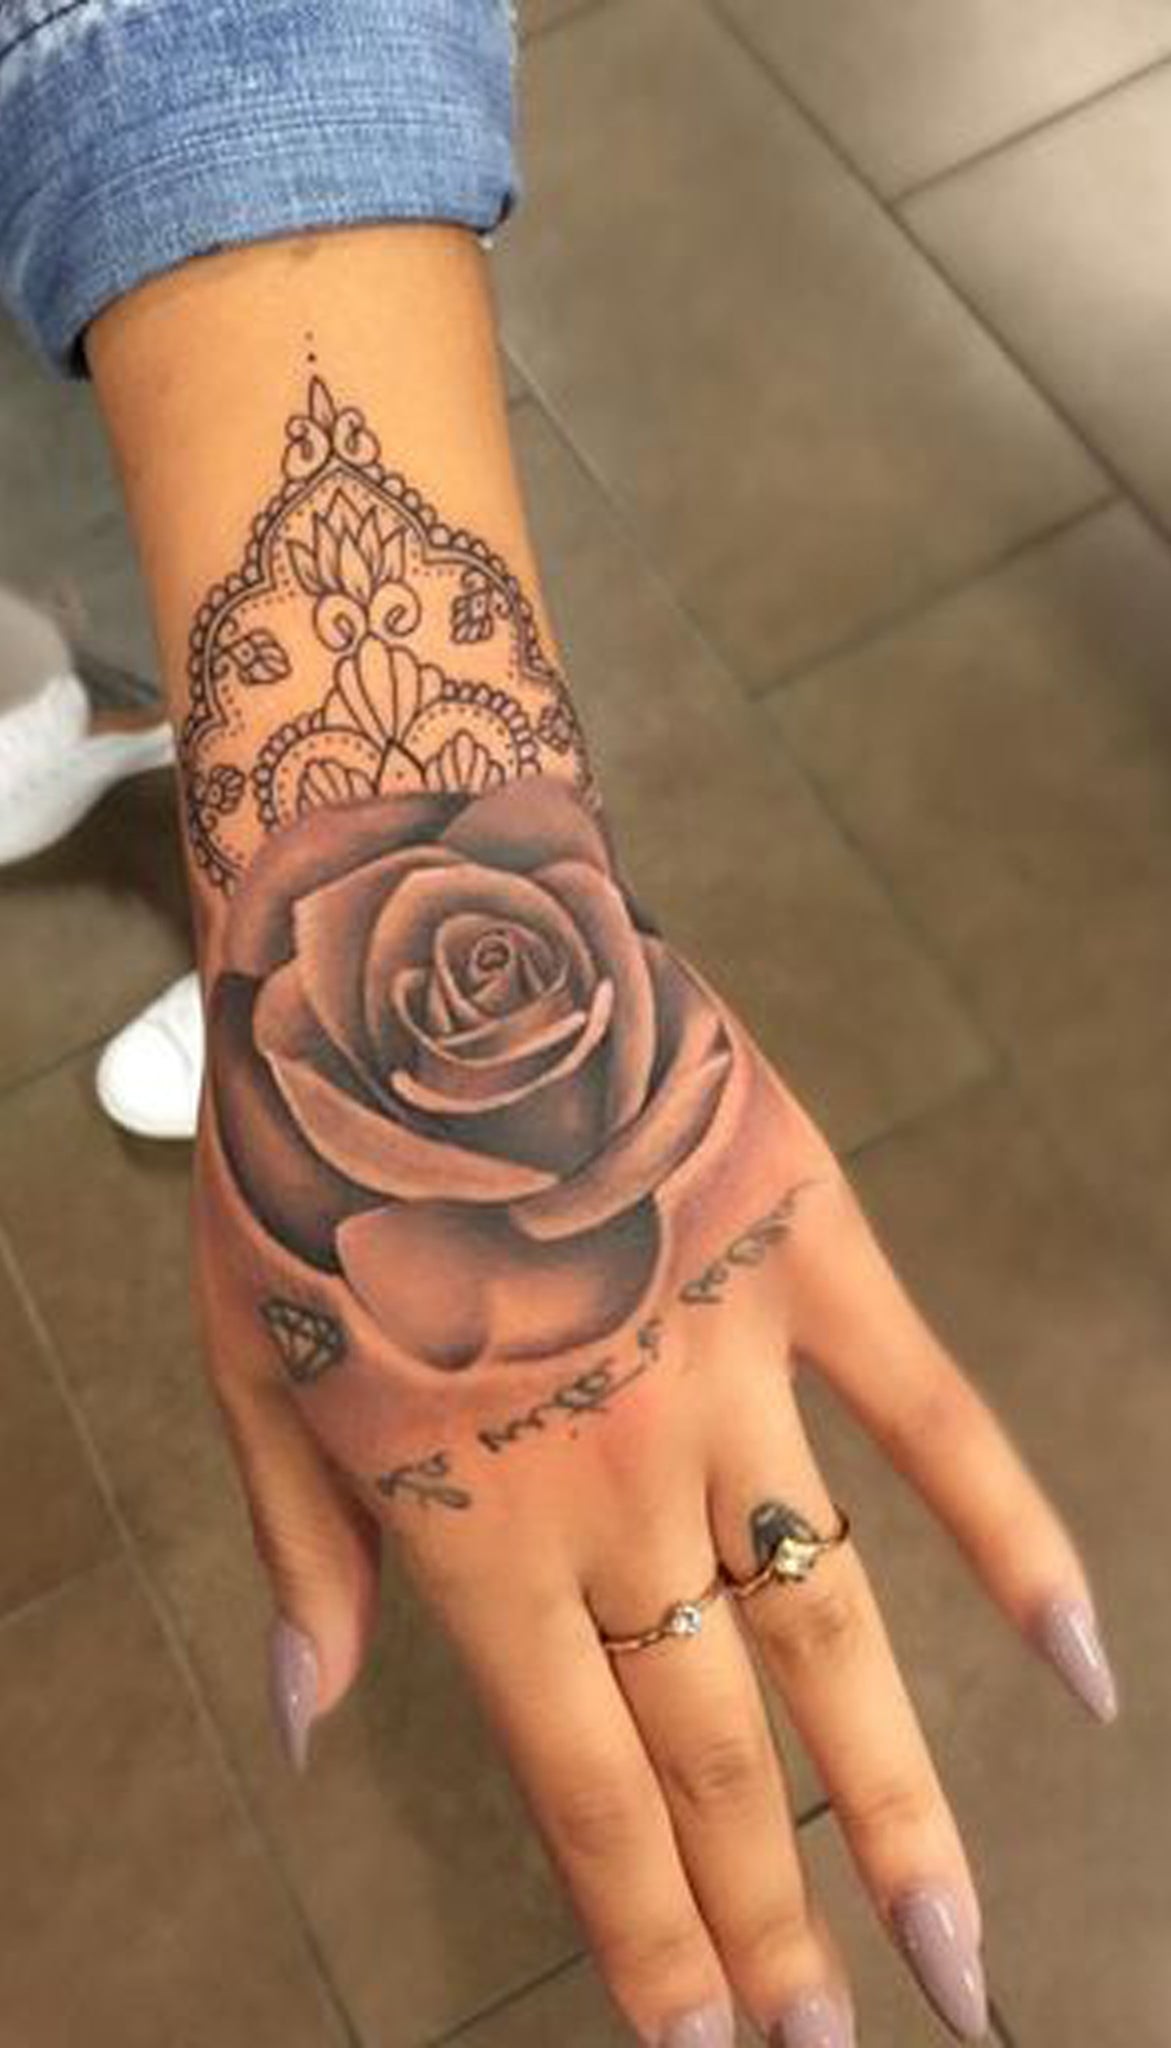 Geometric Rose Hand Tattoo Ideas for Women - Unique Watercolor Mandala Tat - www.MyBodiArt.com #tattoos